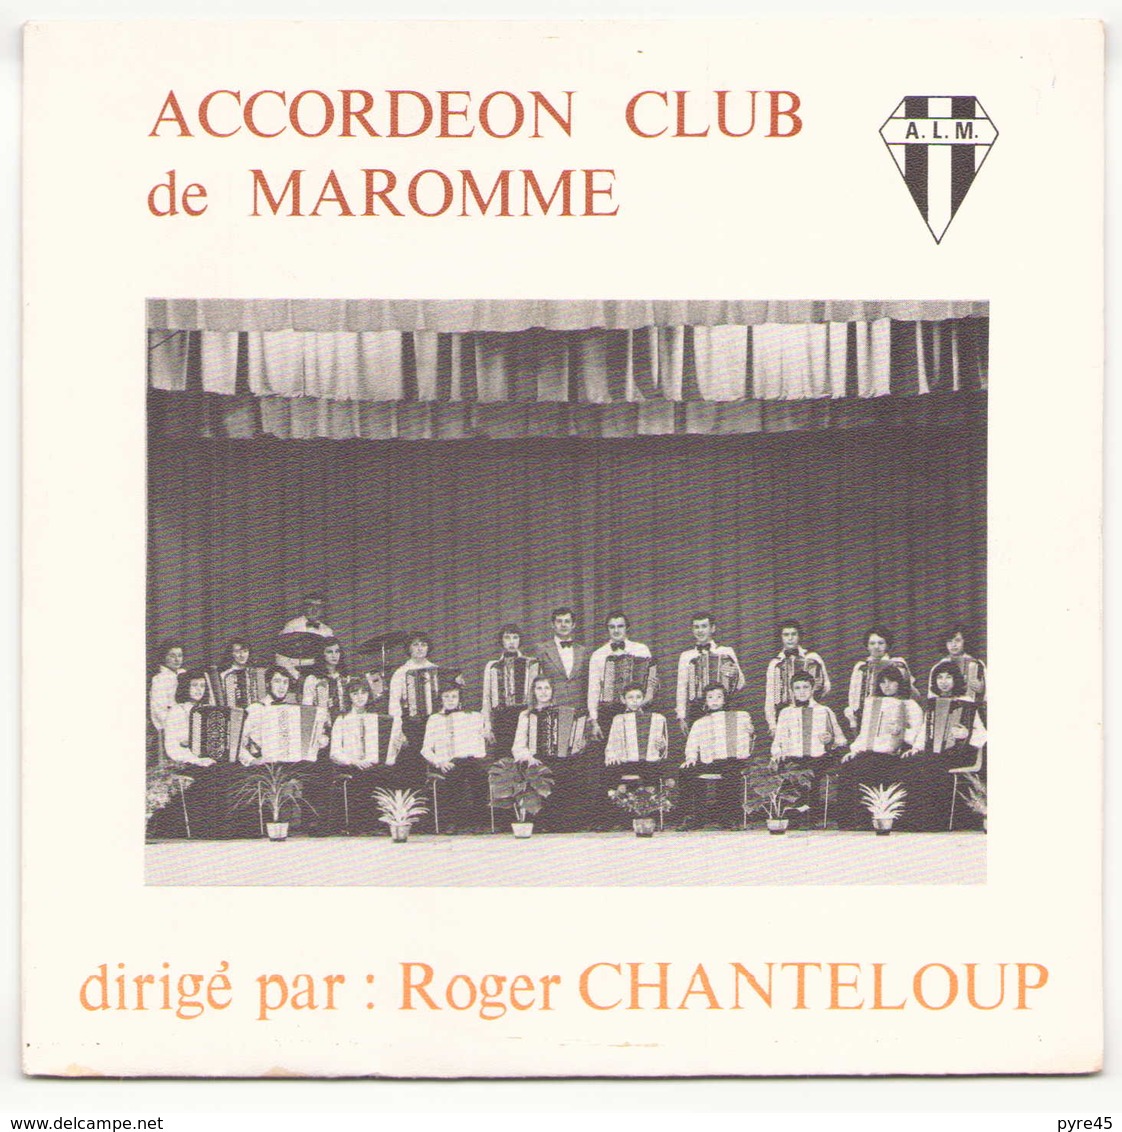 45 TOURS ACCORDEON CLUB DE MAROMME VA 7901 GRANADA / AIMER BOIRE ET CHANTER - Instrumental